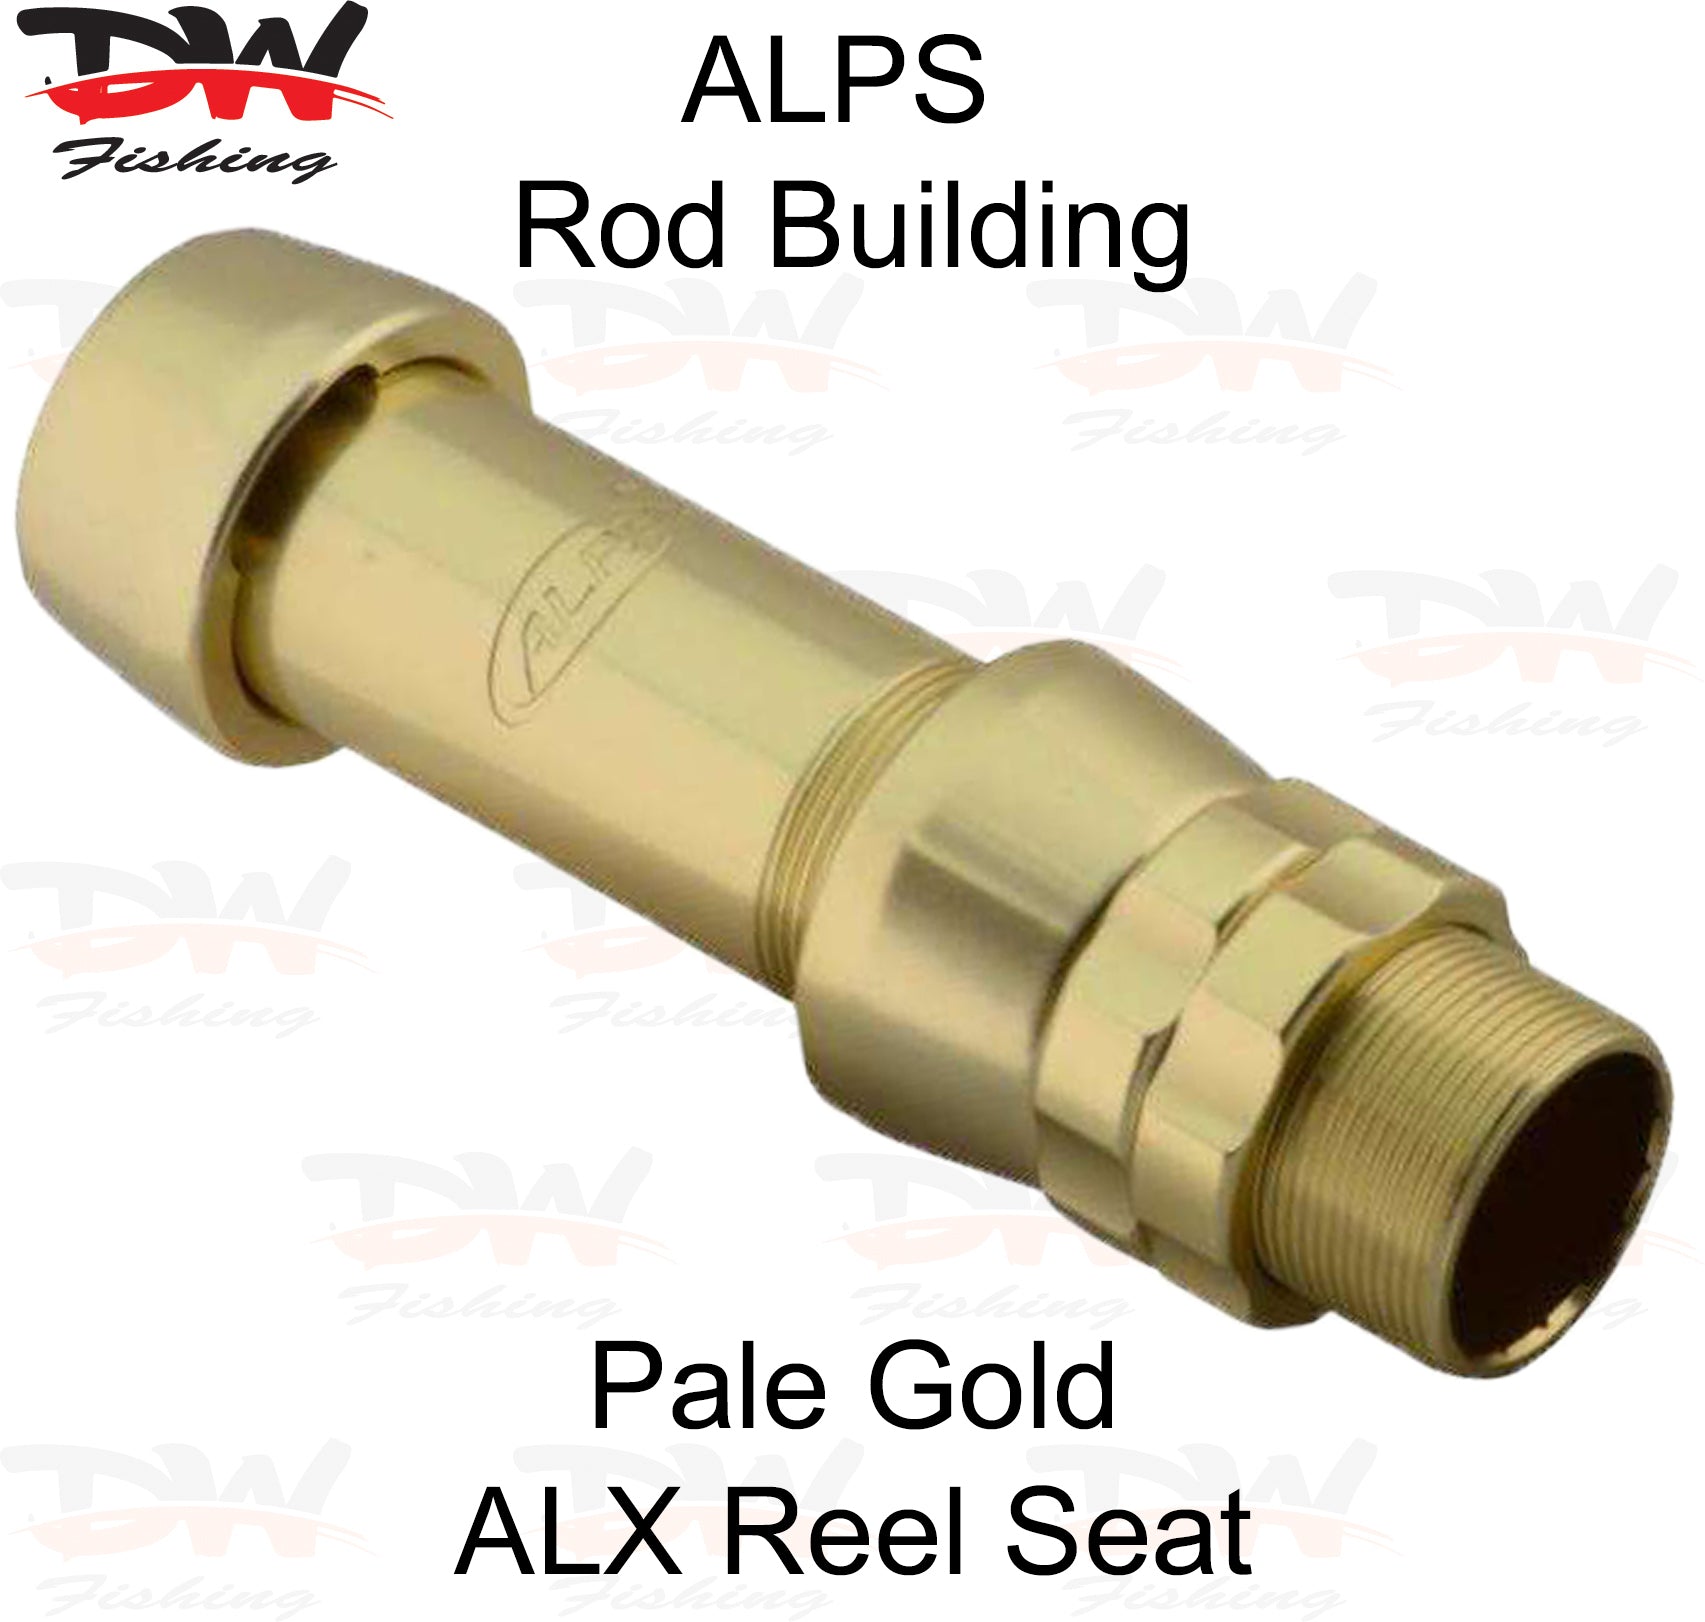 ALPS ALX Heavy Duty Alloy Reel Seat, Rod Building